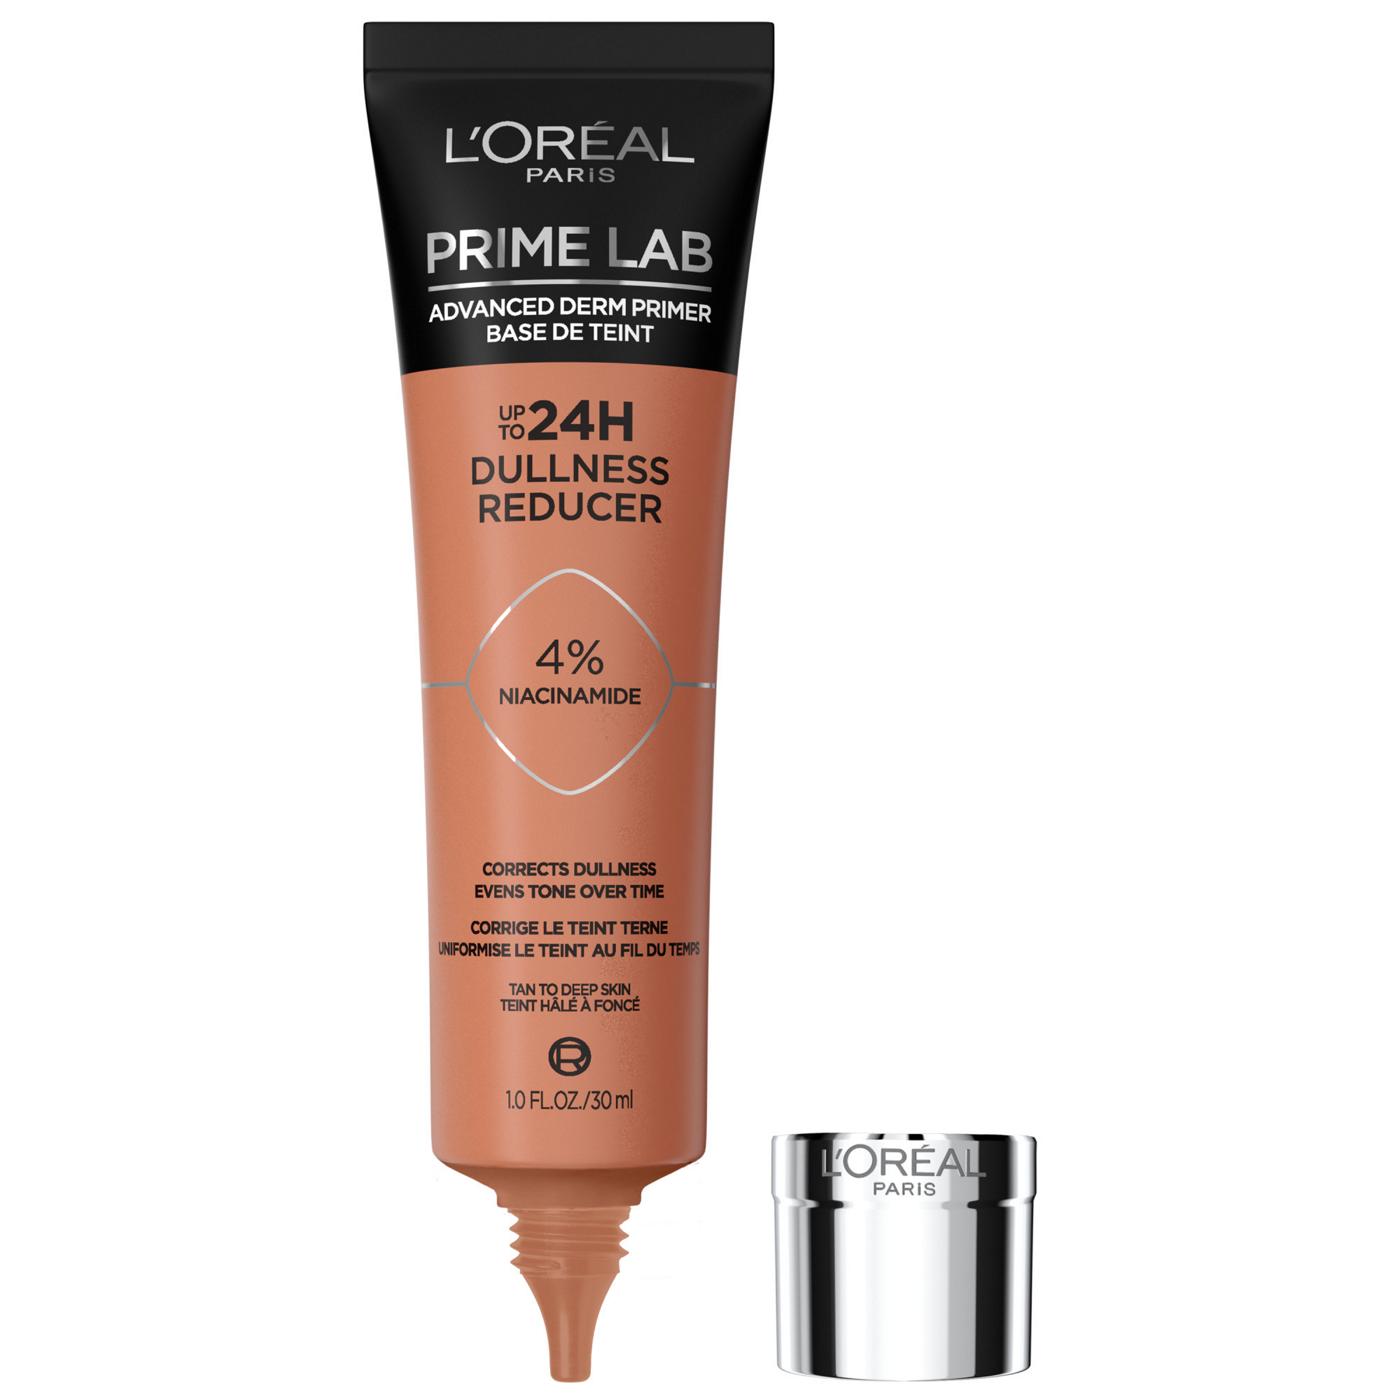 L'Oréal Paris Prime Lab Primer Dullness Reducer; image 1 of 6